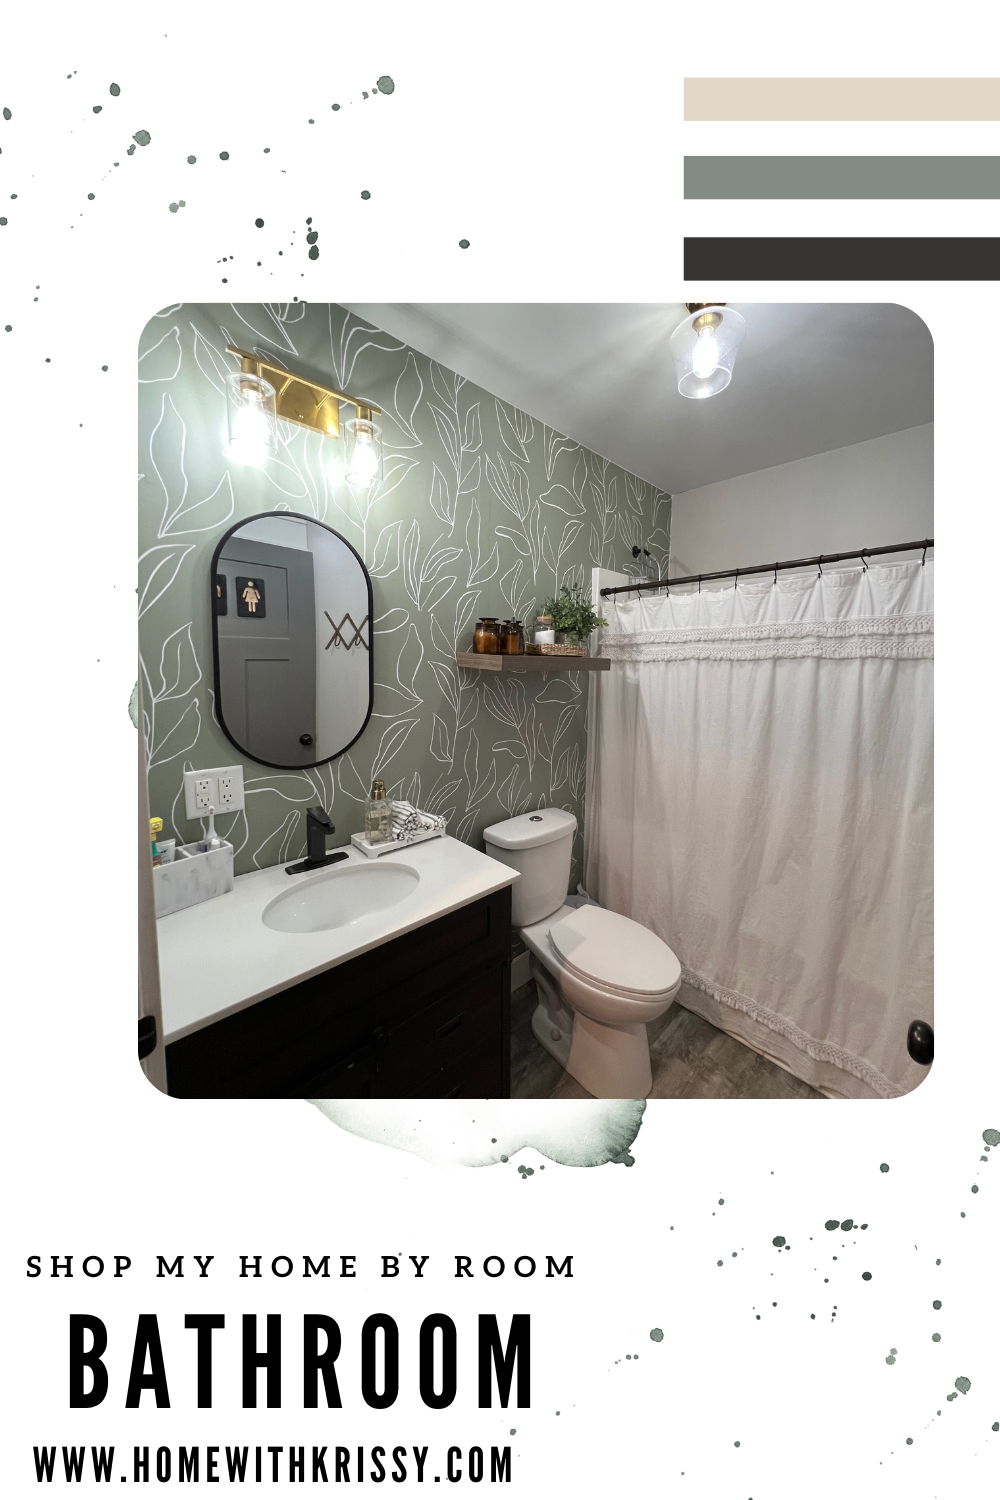 Shop My Home By Room –Bathroom #bathroom #bathroomdesign #bathroomdecor #homedecorinspo #decorinspo #moderndecor #modernorganic #neutraldecor #budgetfriendlydecor #decoronabudget #diyhome #diyhomedecor